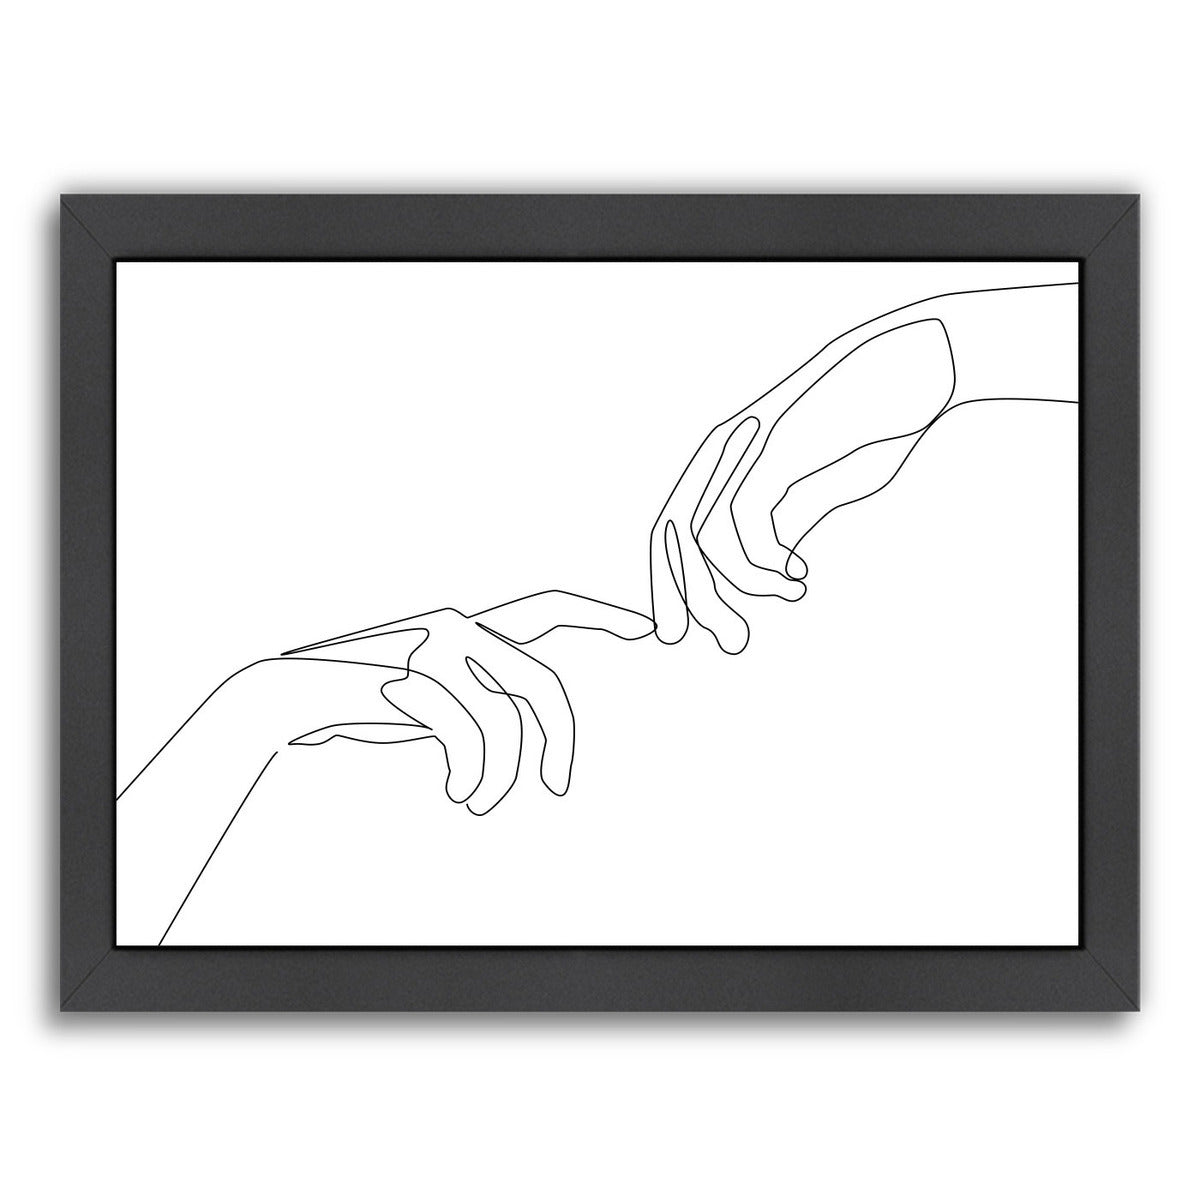 Finger Touch by Explicit Design Framed Print - Americanflat